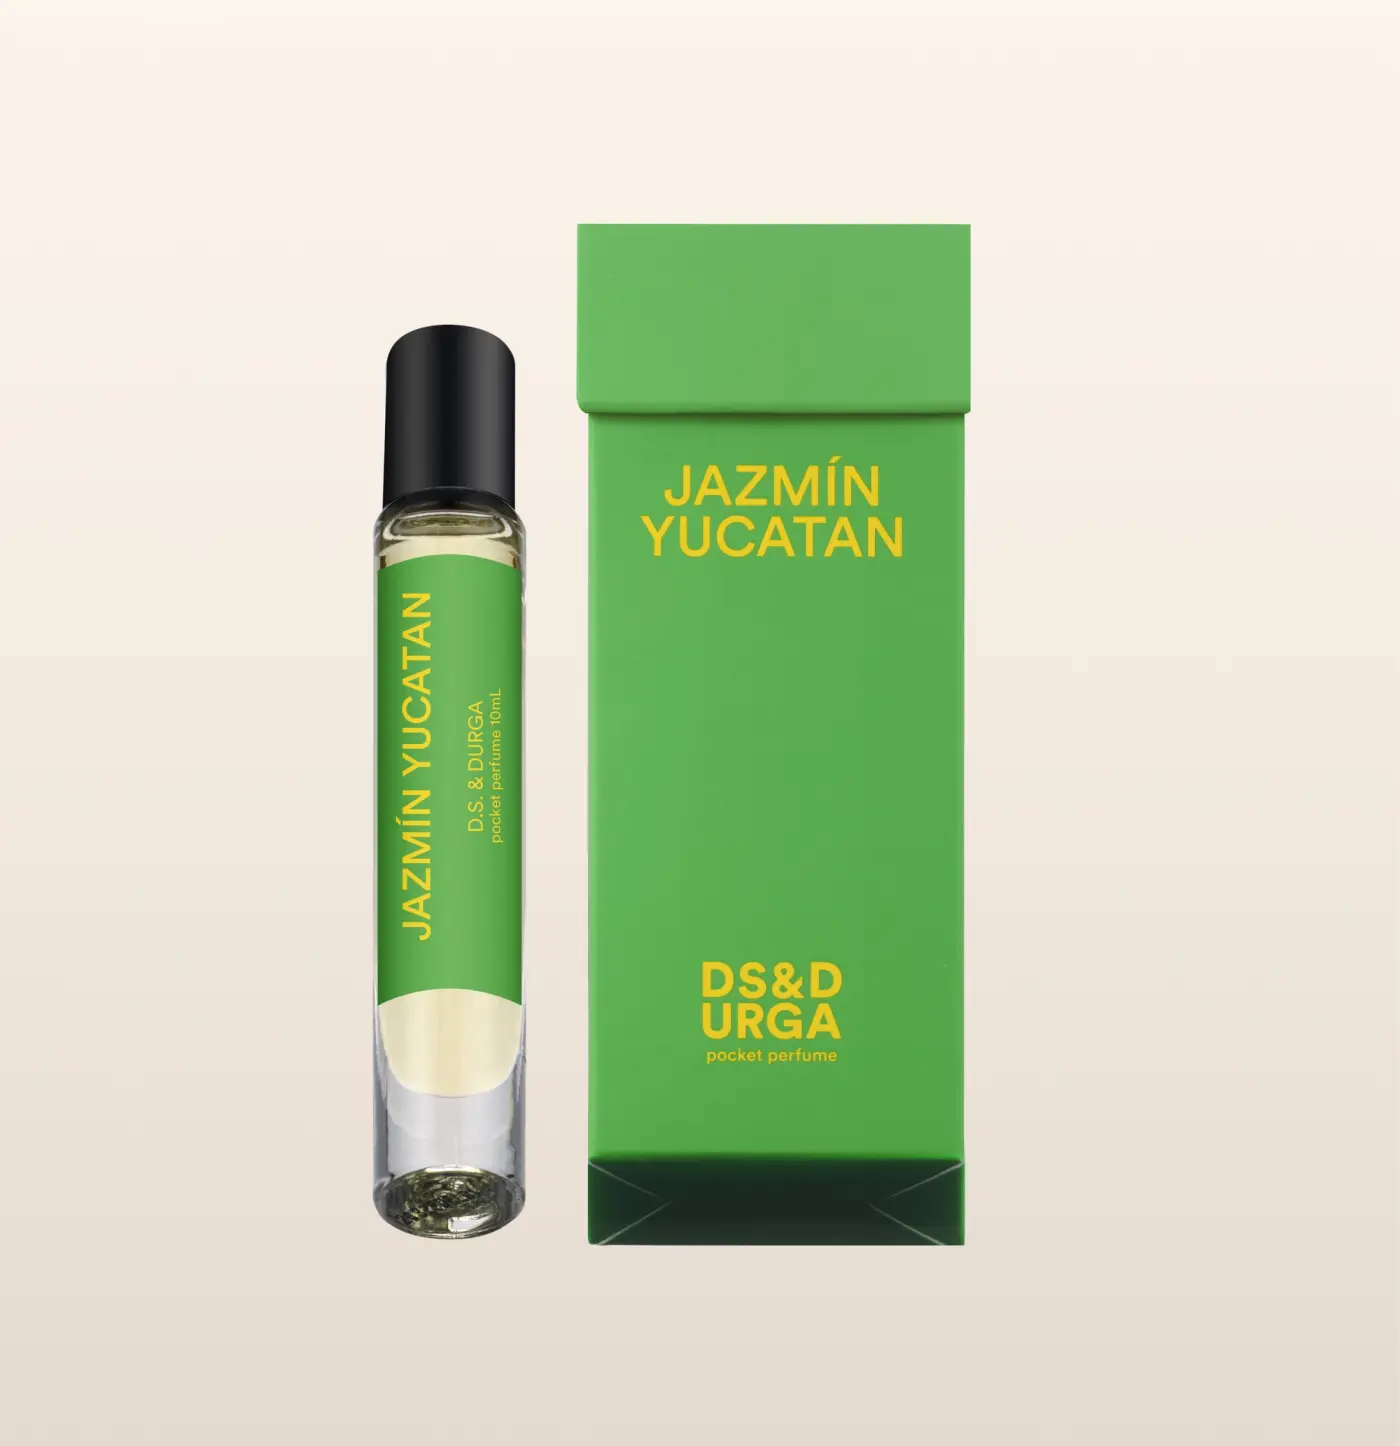 Jazmin Yucatan Perfume by D.S. & Durga